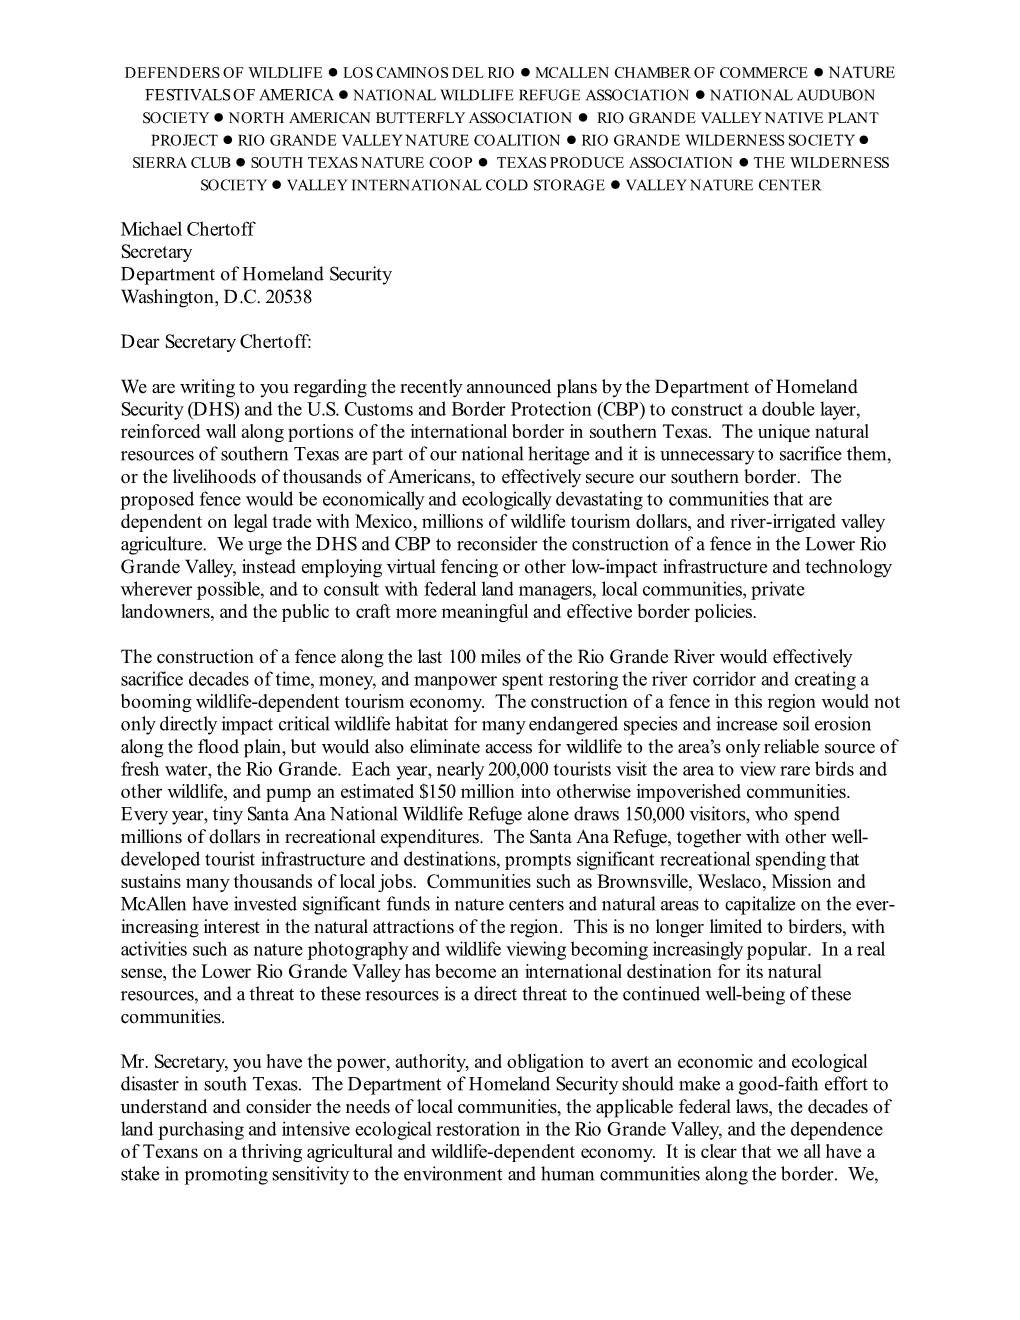 Group Letter to DHS Sec. Chertoff Opposing